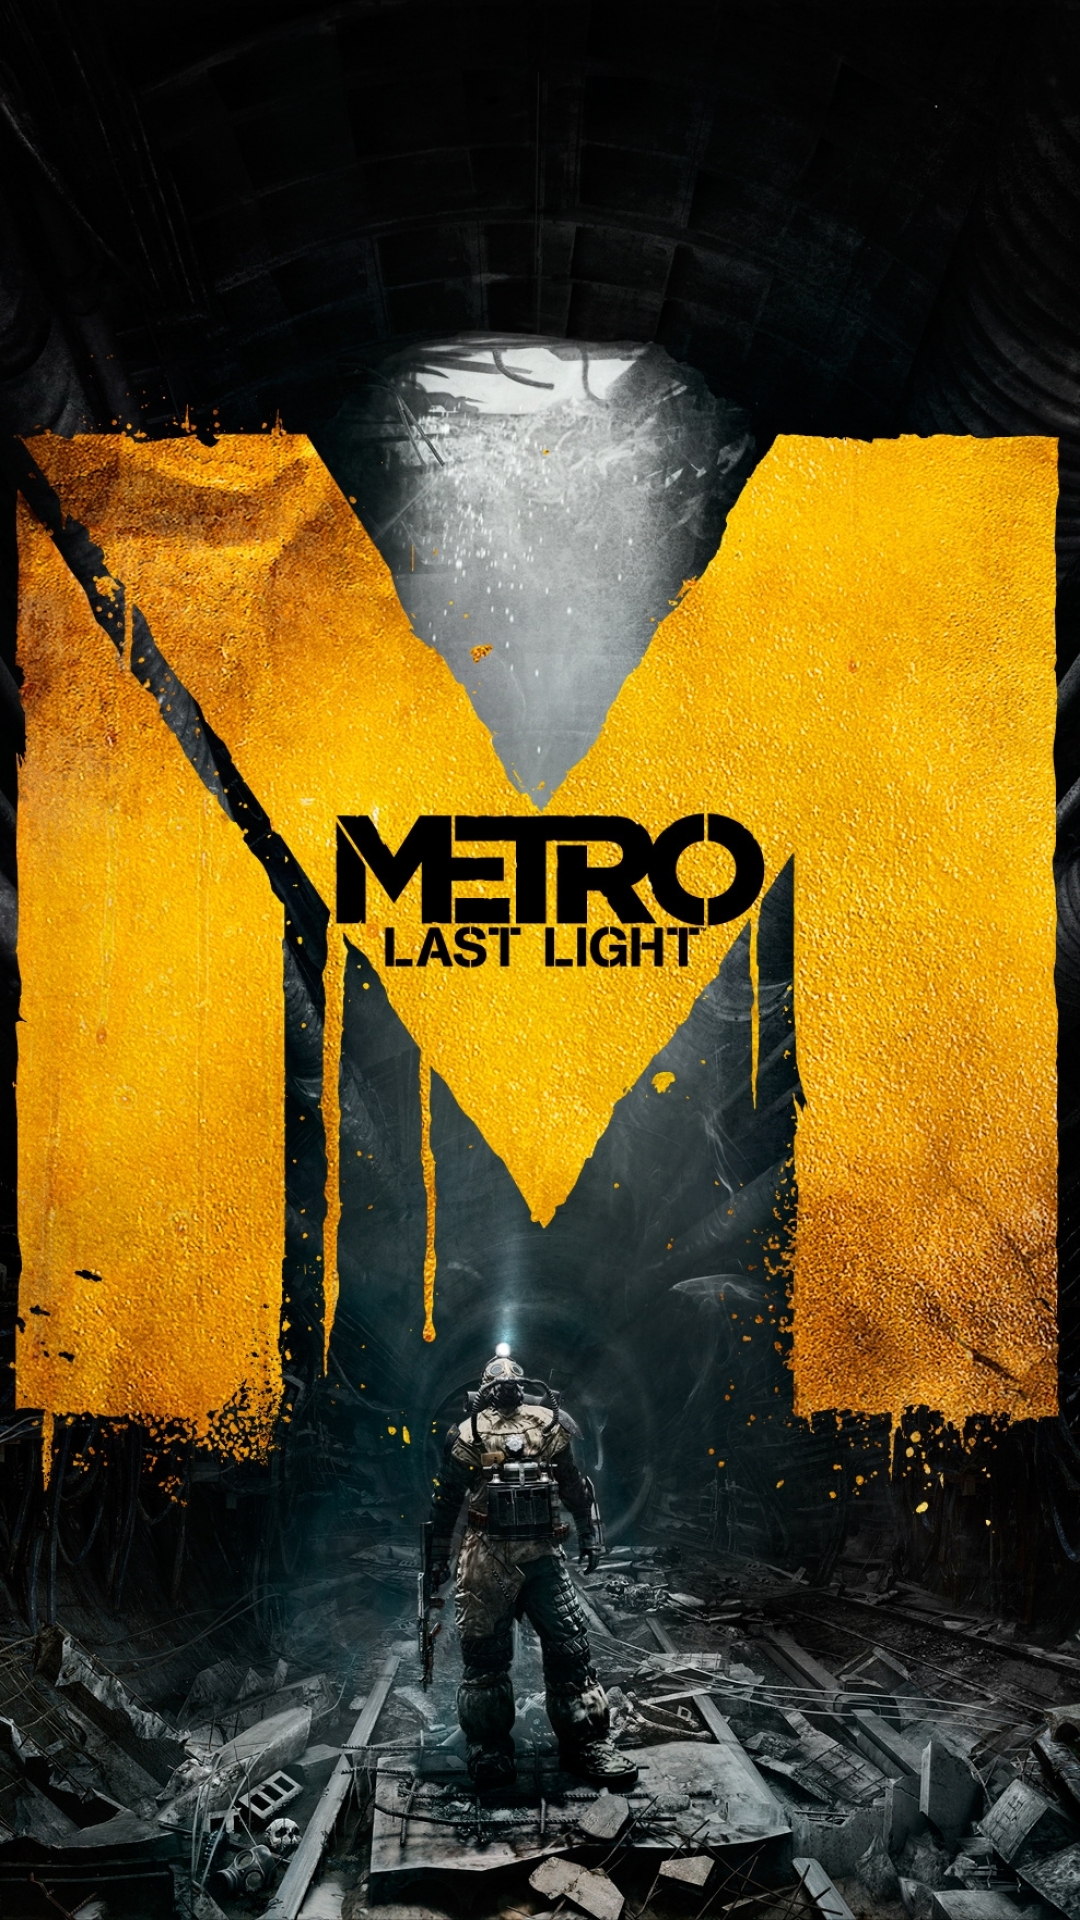 Baixar papel de parede para celular de Metrô, Videogame, Metro: Last Light gratuito.